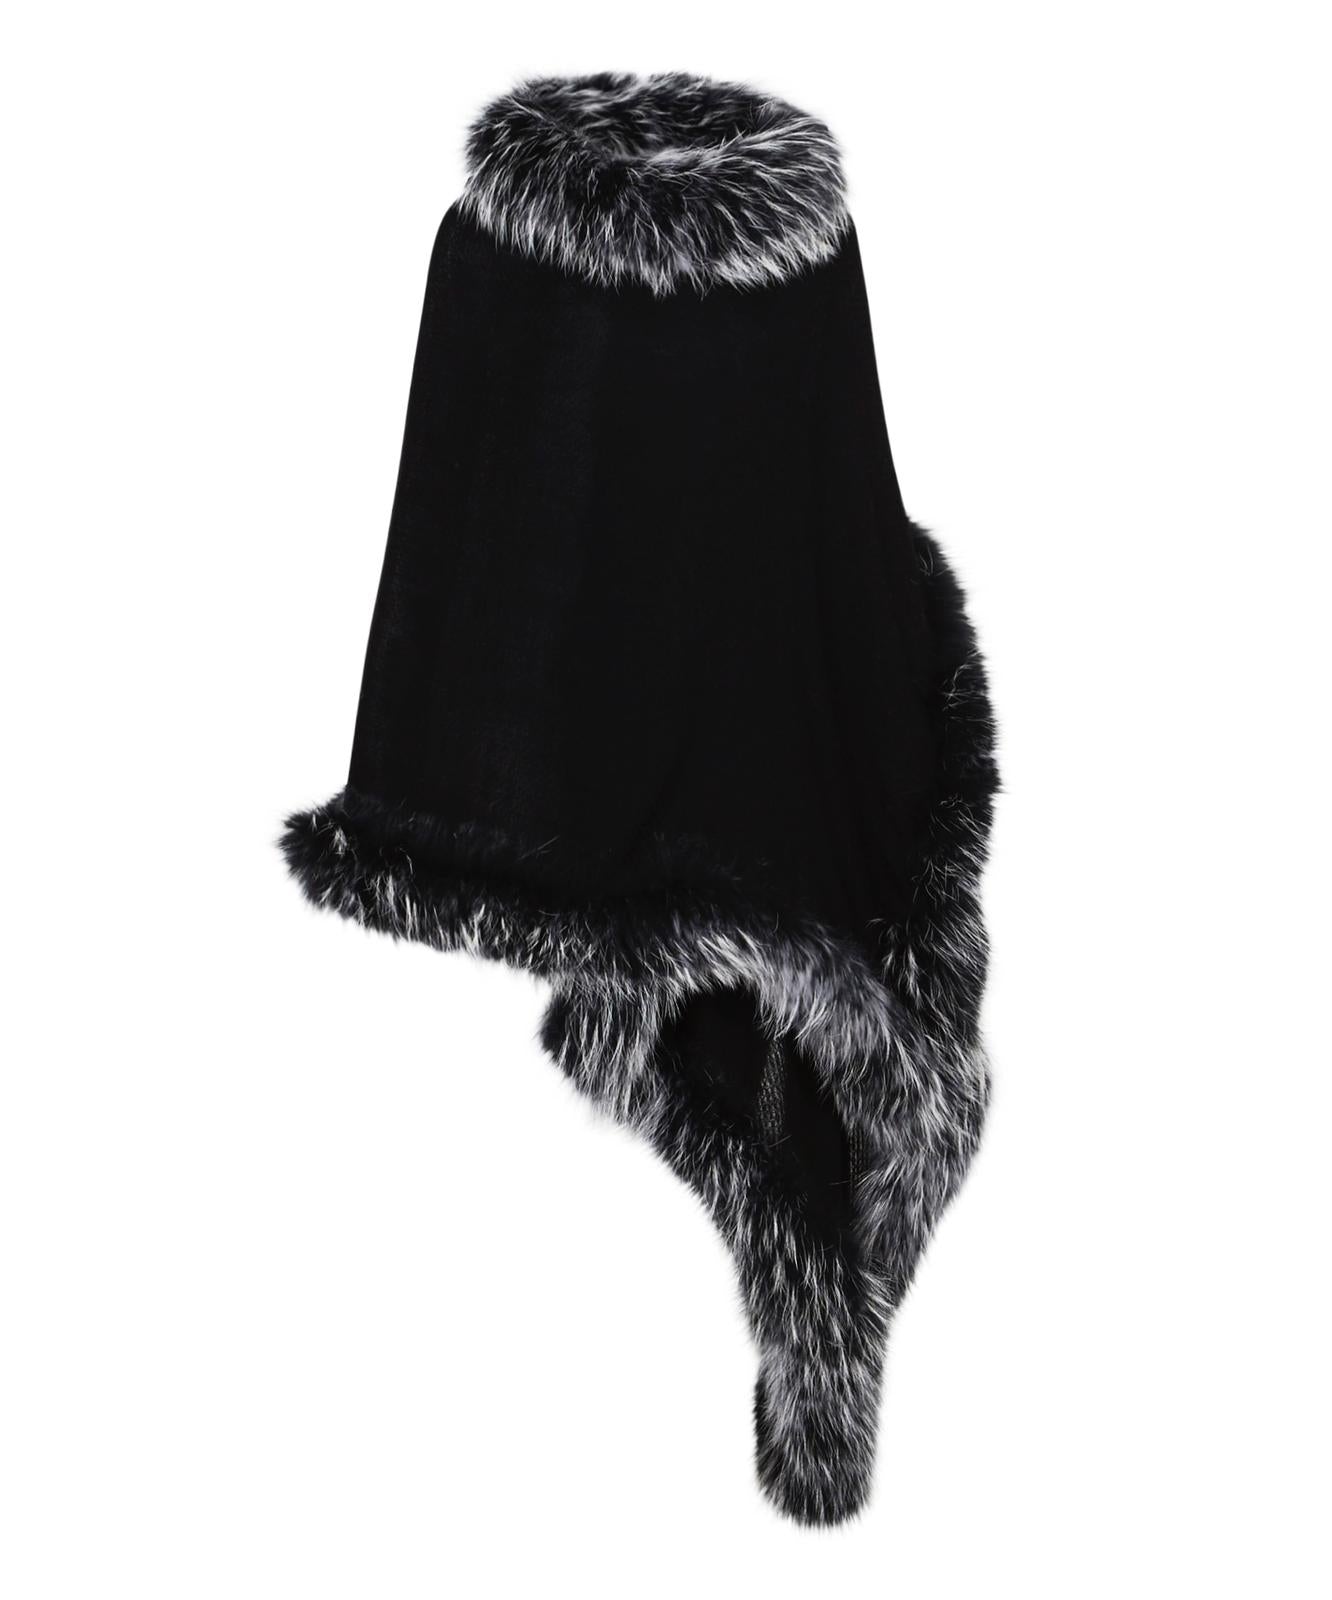 Black Cashmere Wrap with Black and White Fox Fur Trim